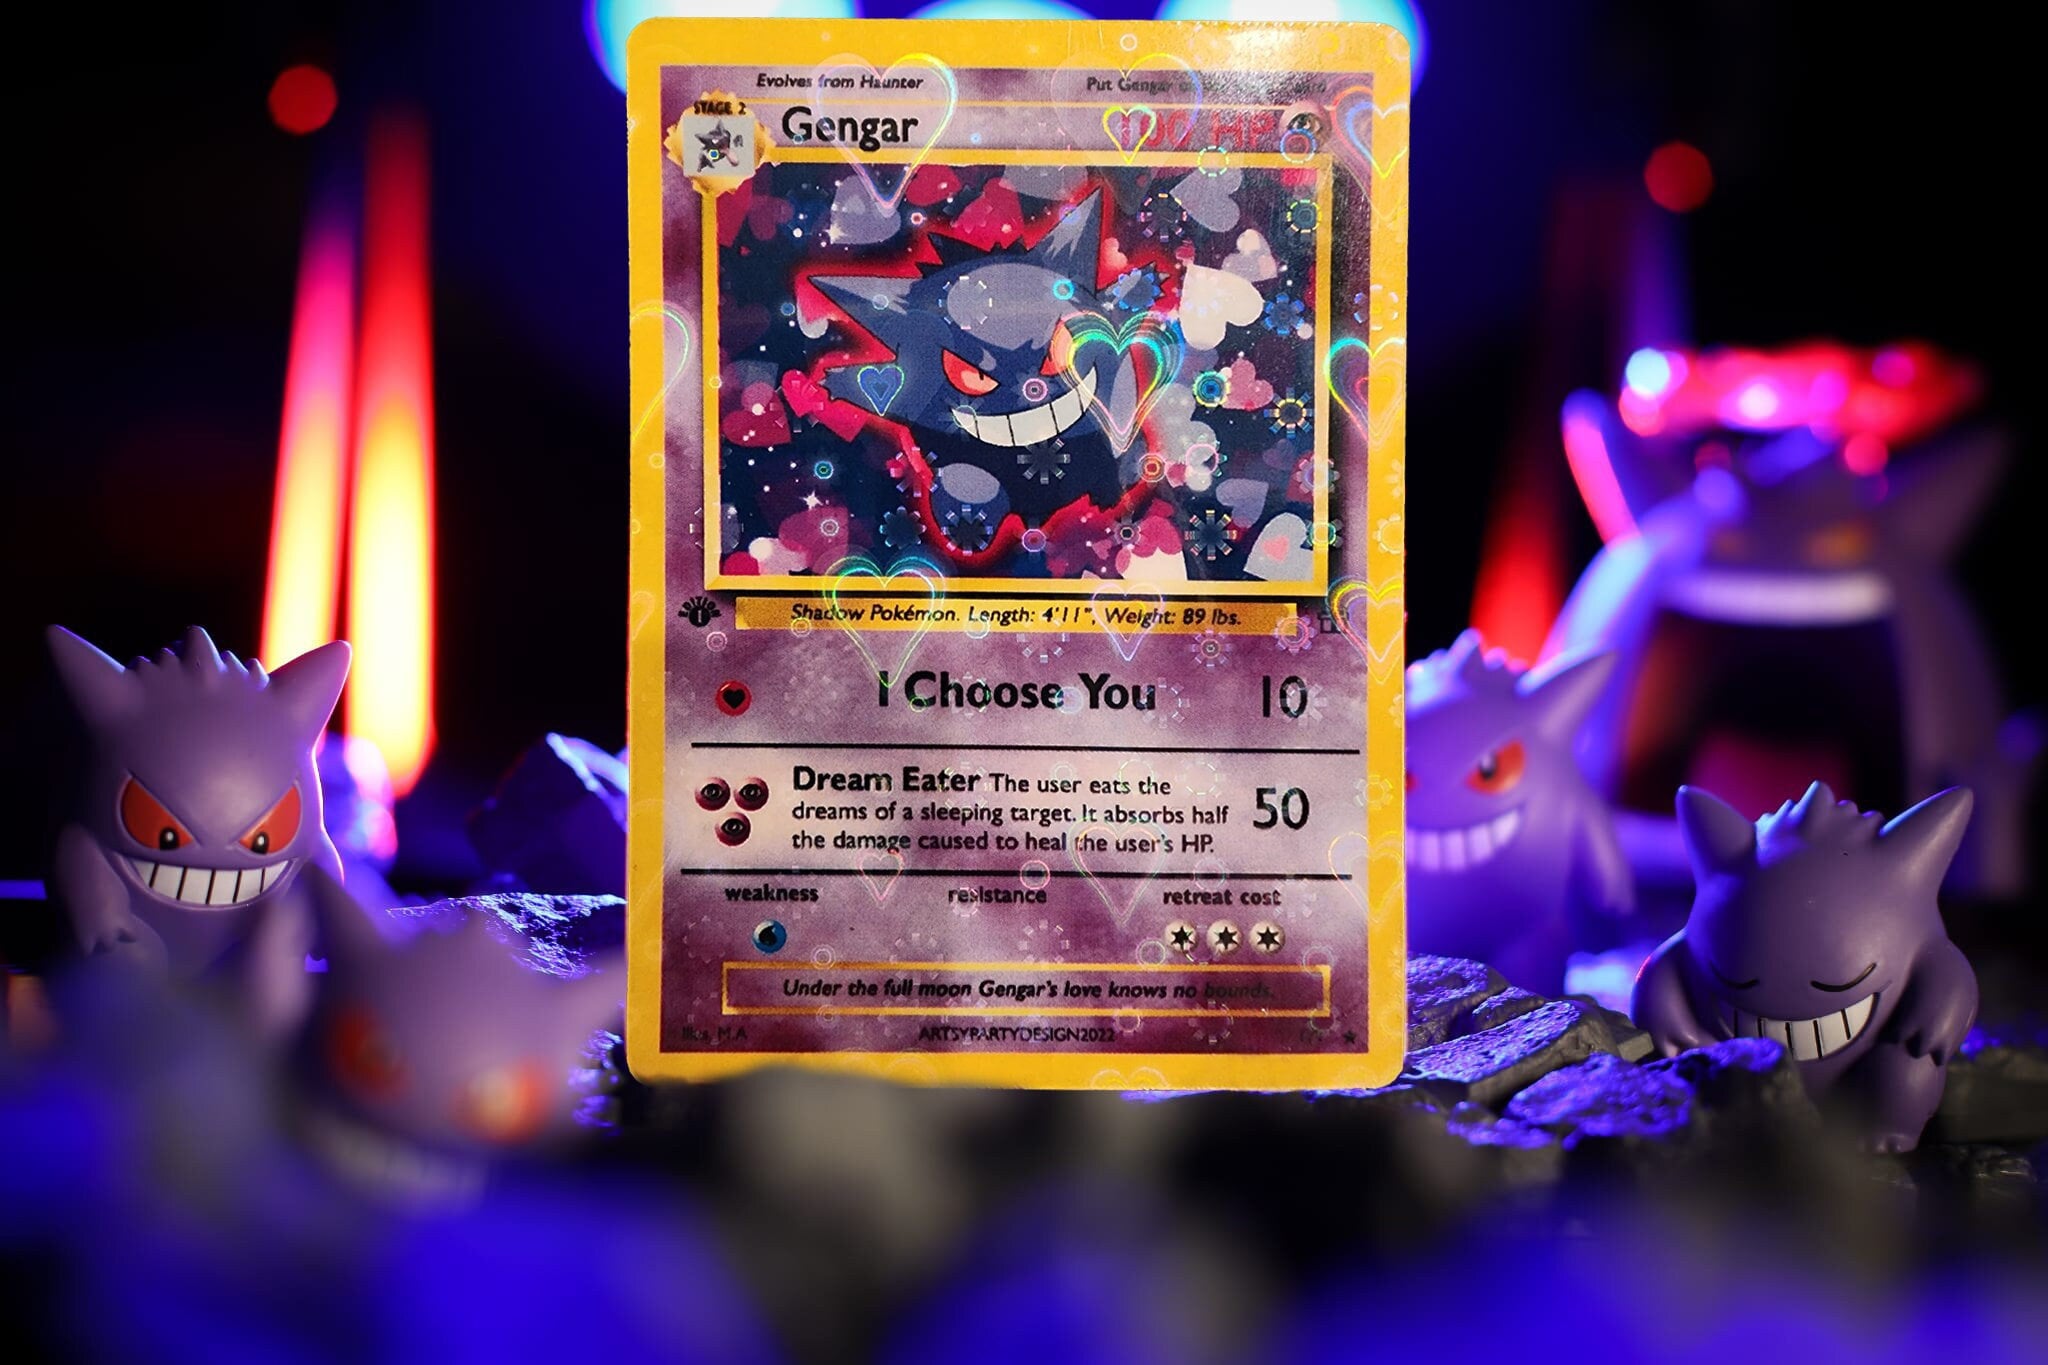 M Gengar & M Shiny Gengar Ex Proxy Pokemon Card Premium Quality Set 2 Cards